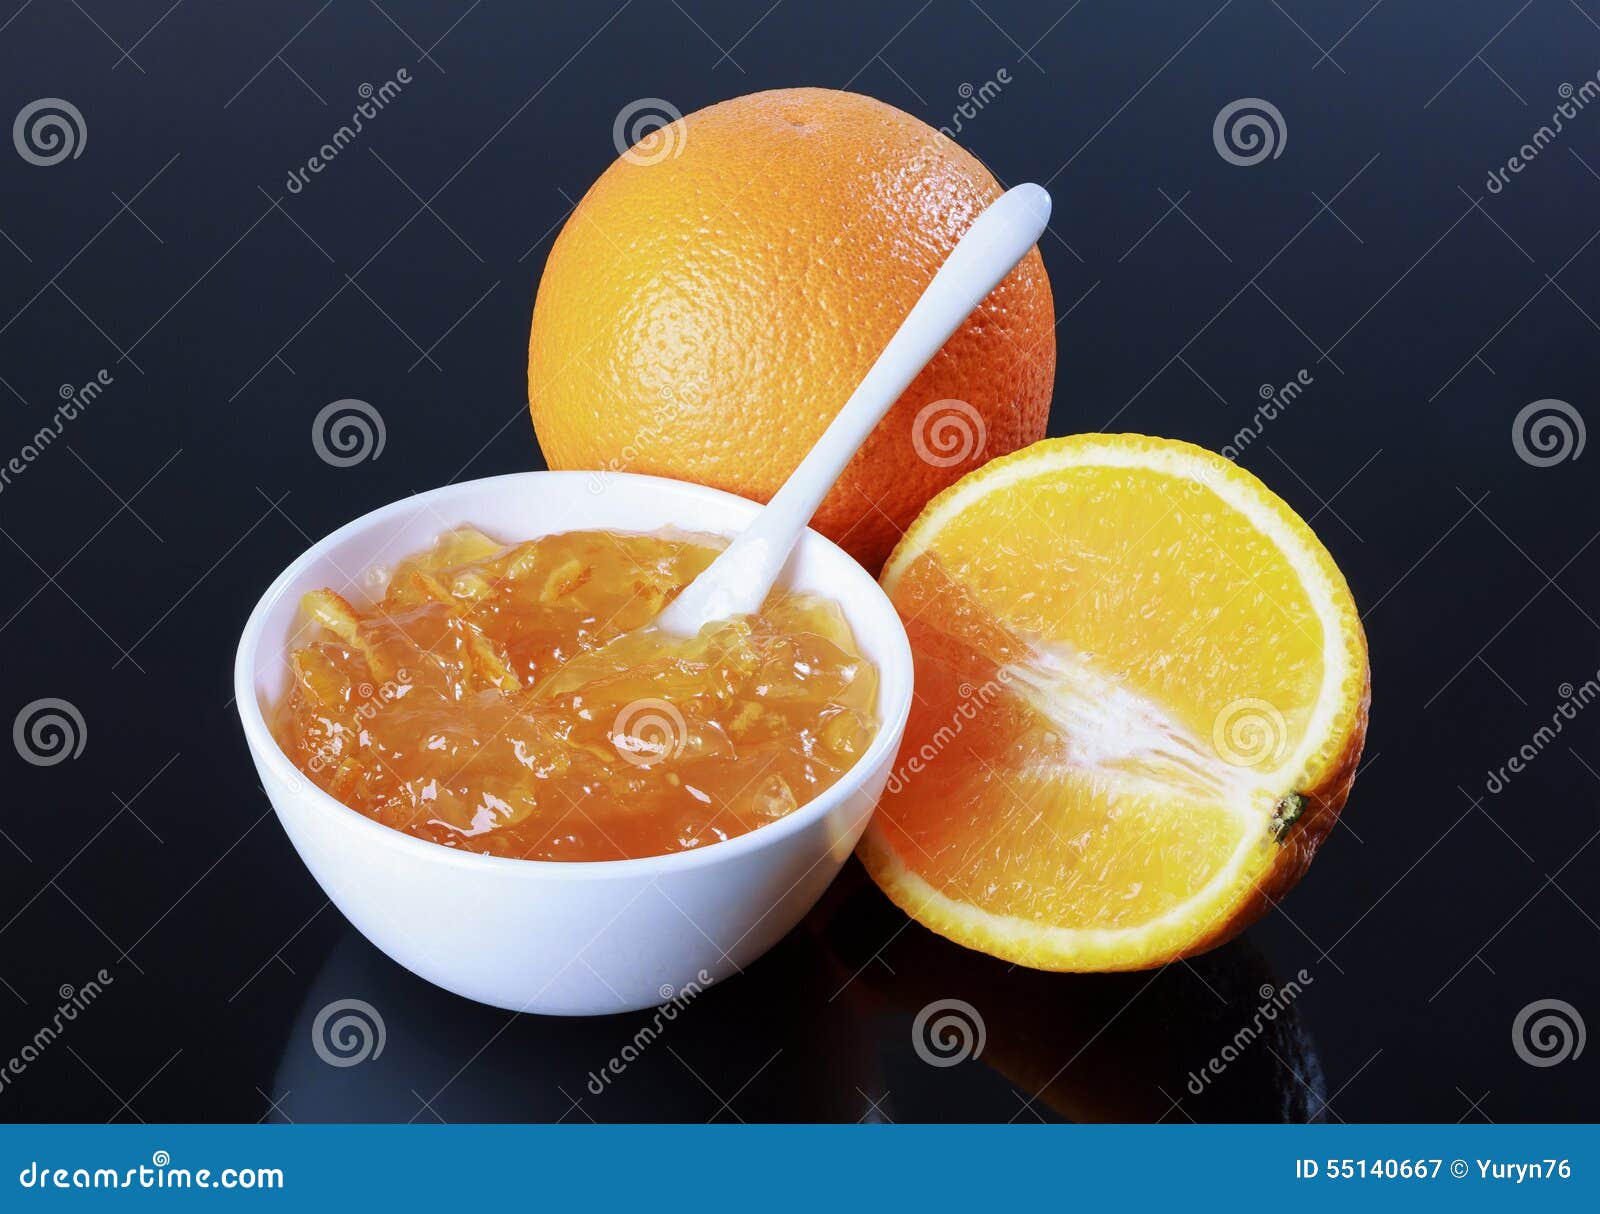 orange marmalade, orange